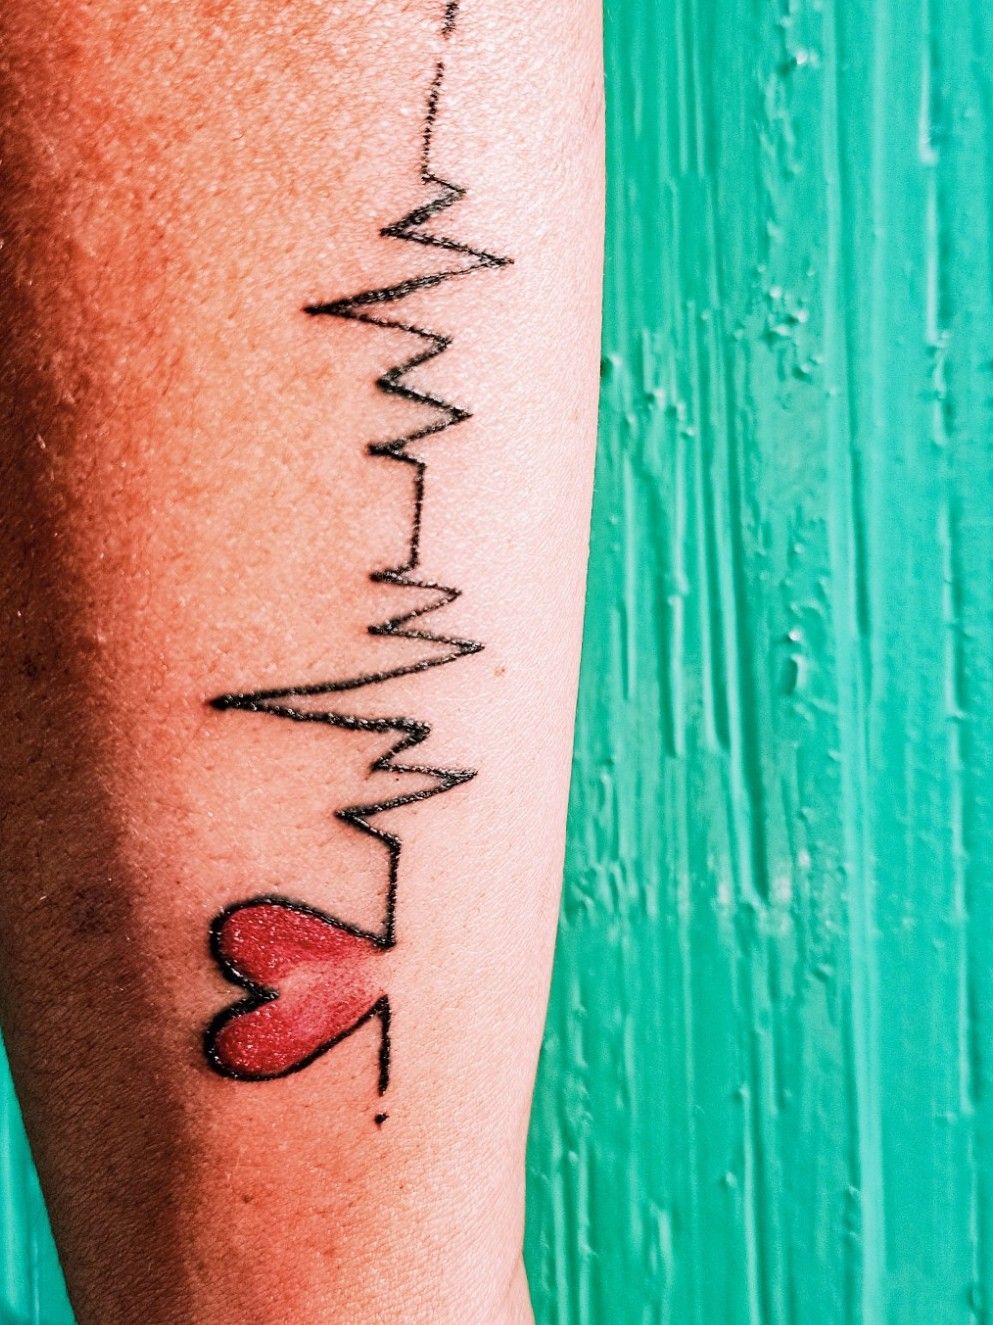 lifeline' in Tattoos • Search in +1.3M Tattoos Now • Tattoodo